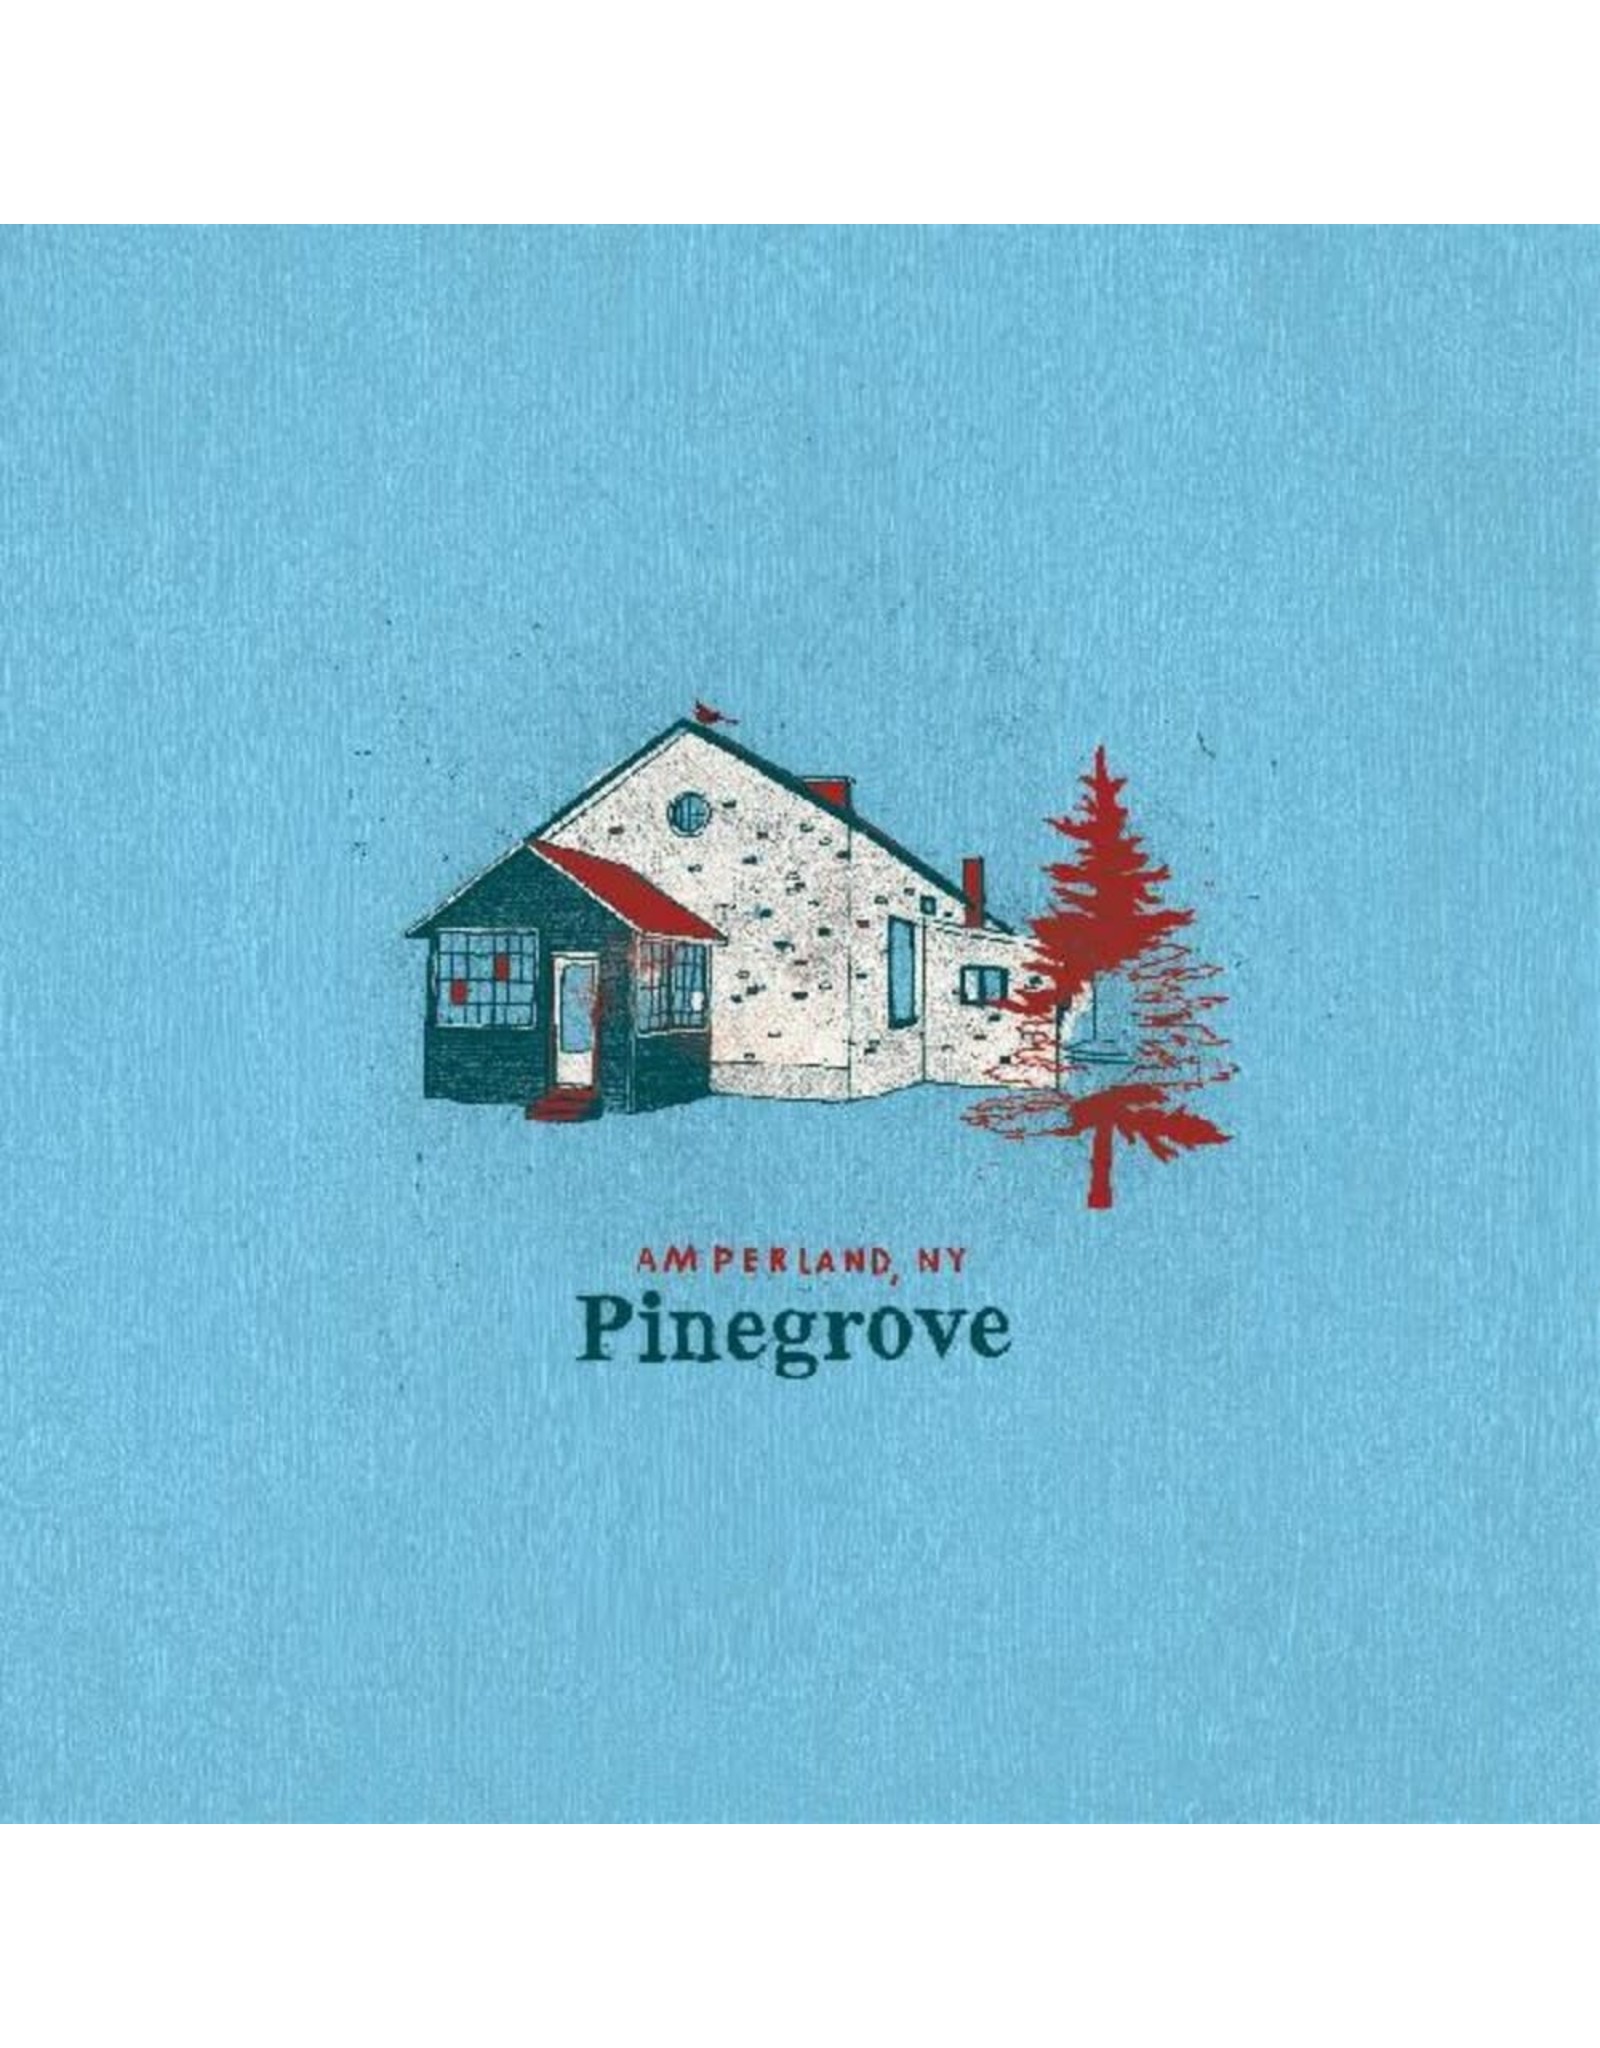 Pinegrove - Amperland, NY LP